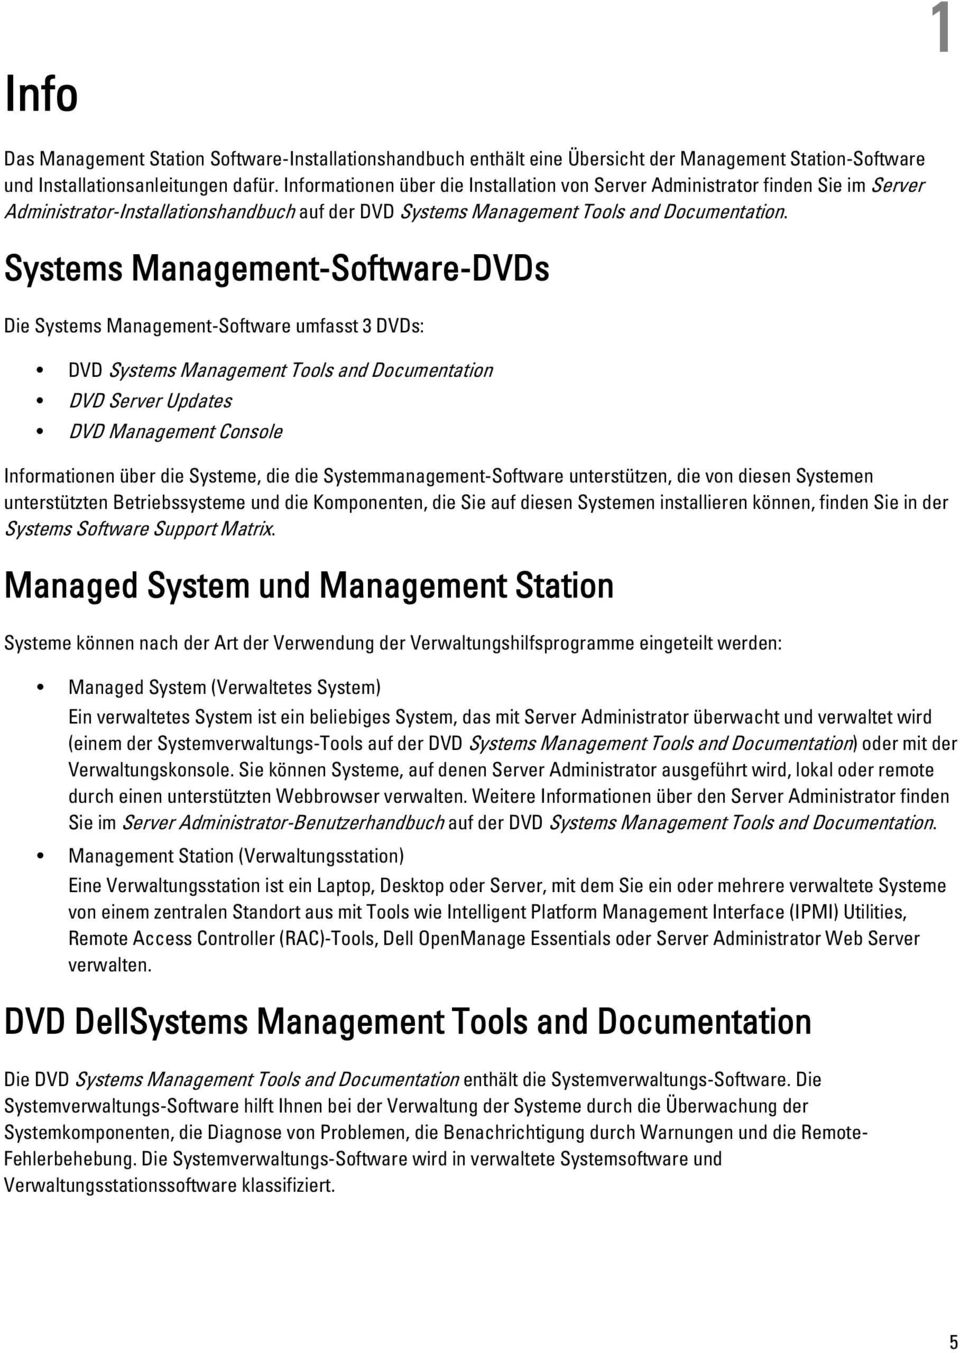 Systems Management-Software-DVDs Die Systems Management-Software umfasst 3 DVDs: DVD Systems Management Tools and Documentation DVD Server Updates DVD Management Console Informationen über die